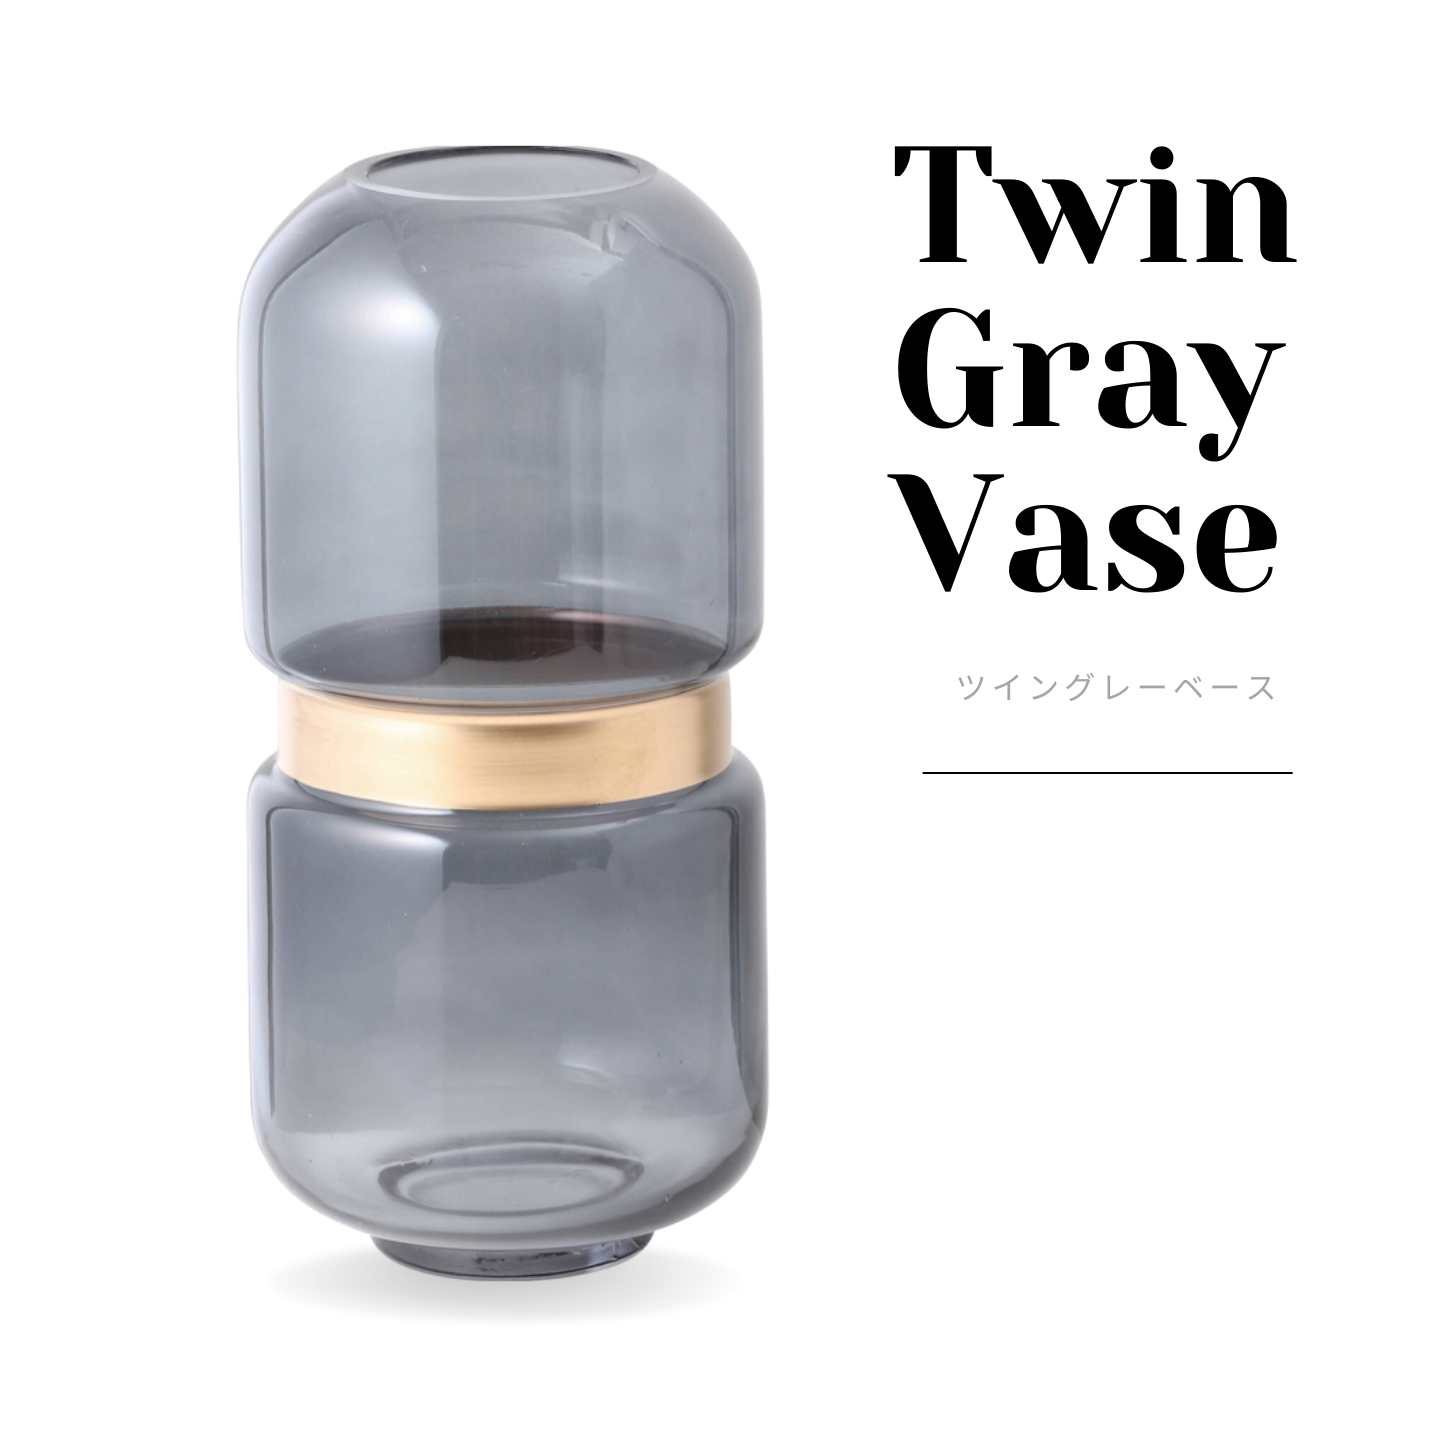 Twin Glay Vase